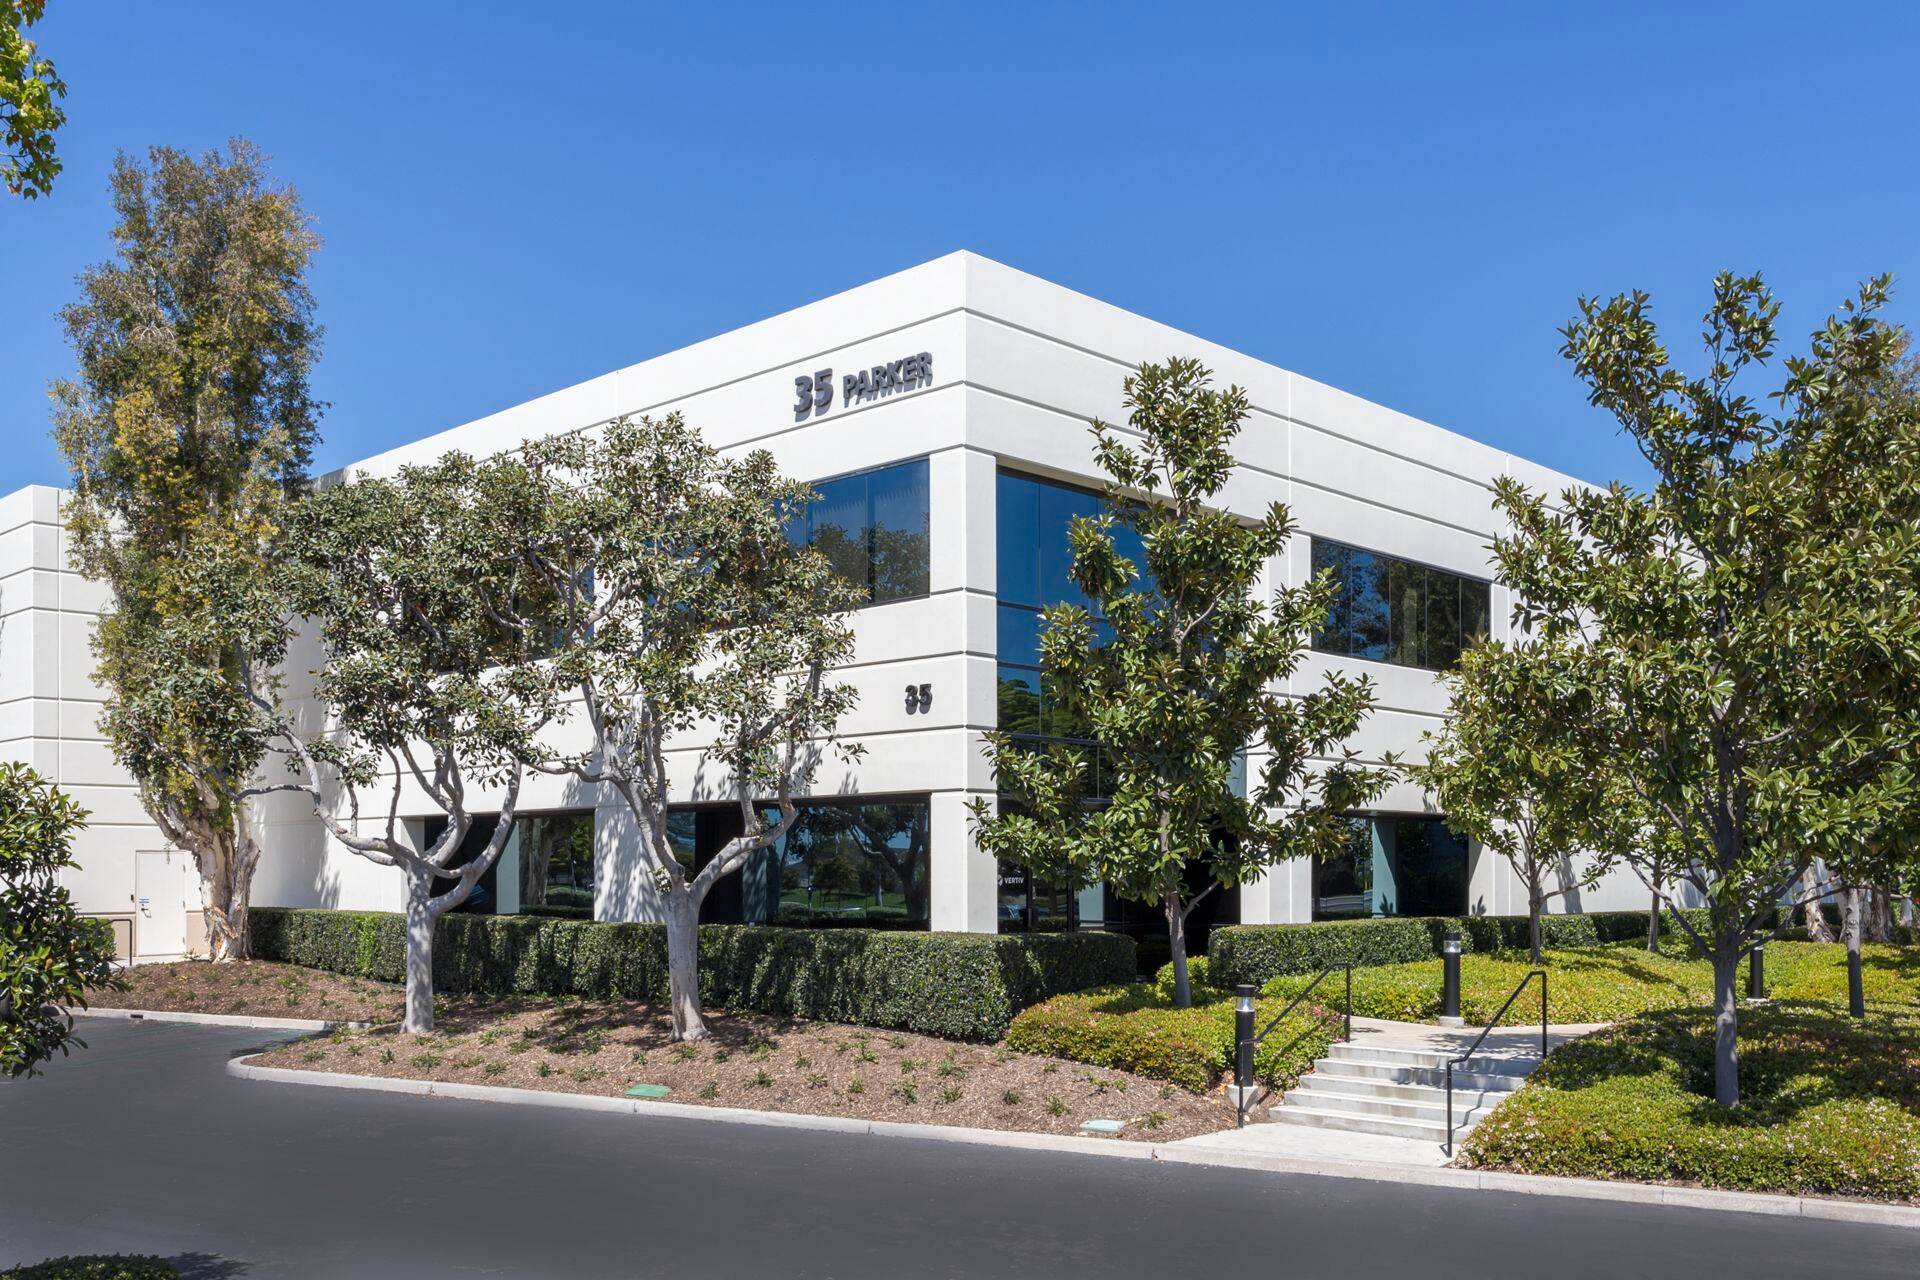 Exterior building photography for Parker Technology Center at 35 Parker, Irvine, CA